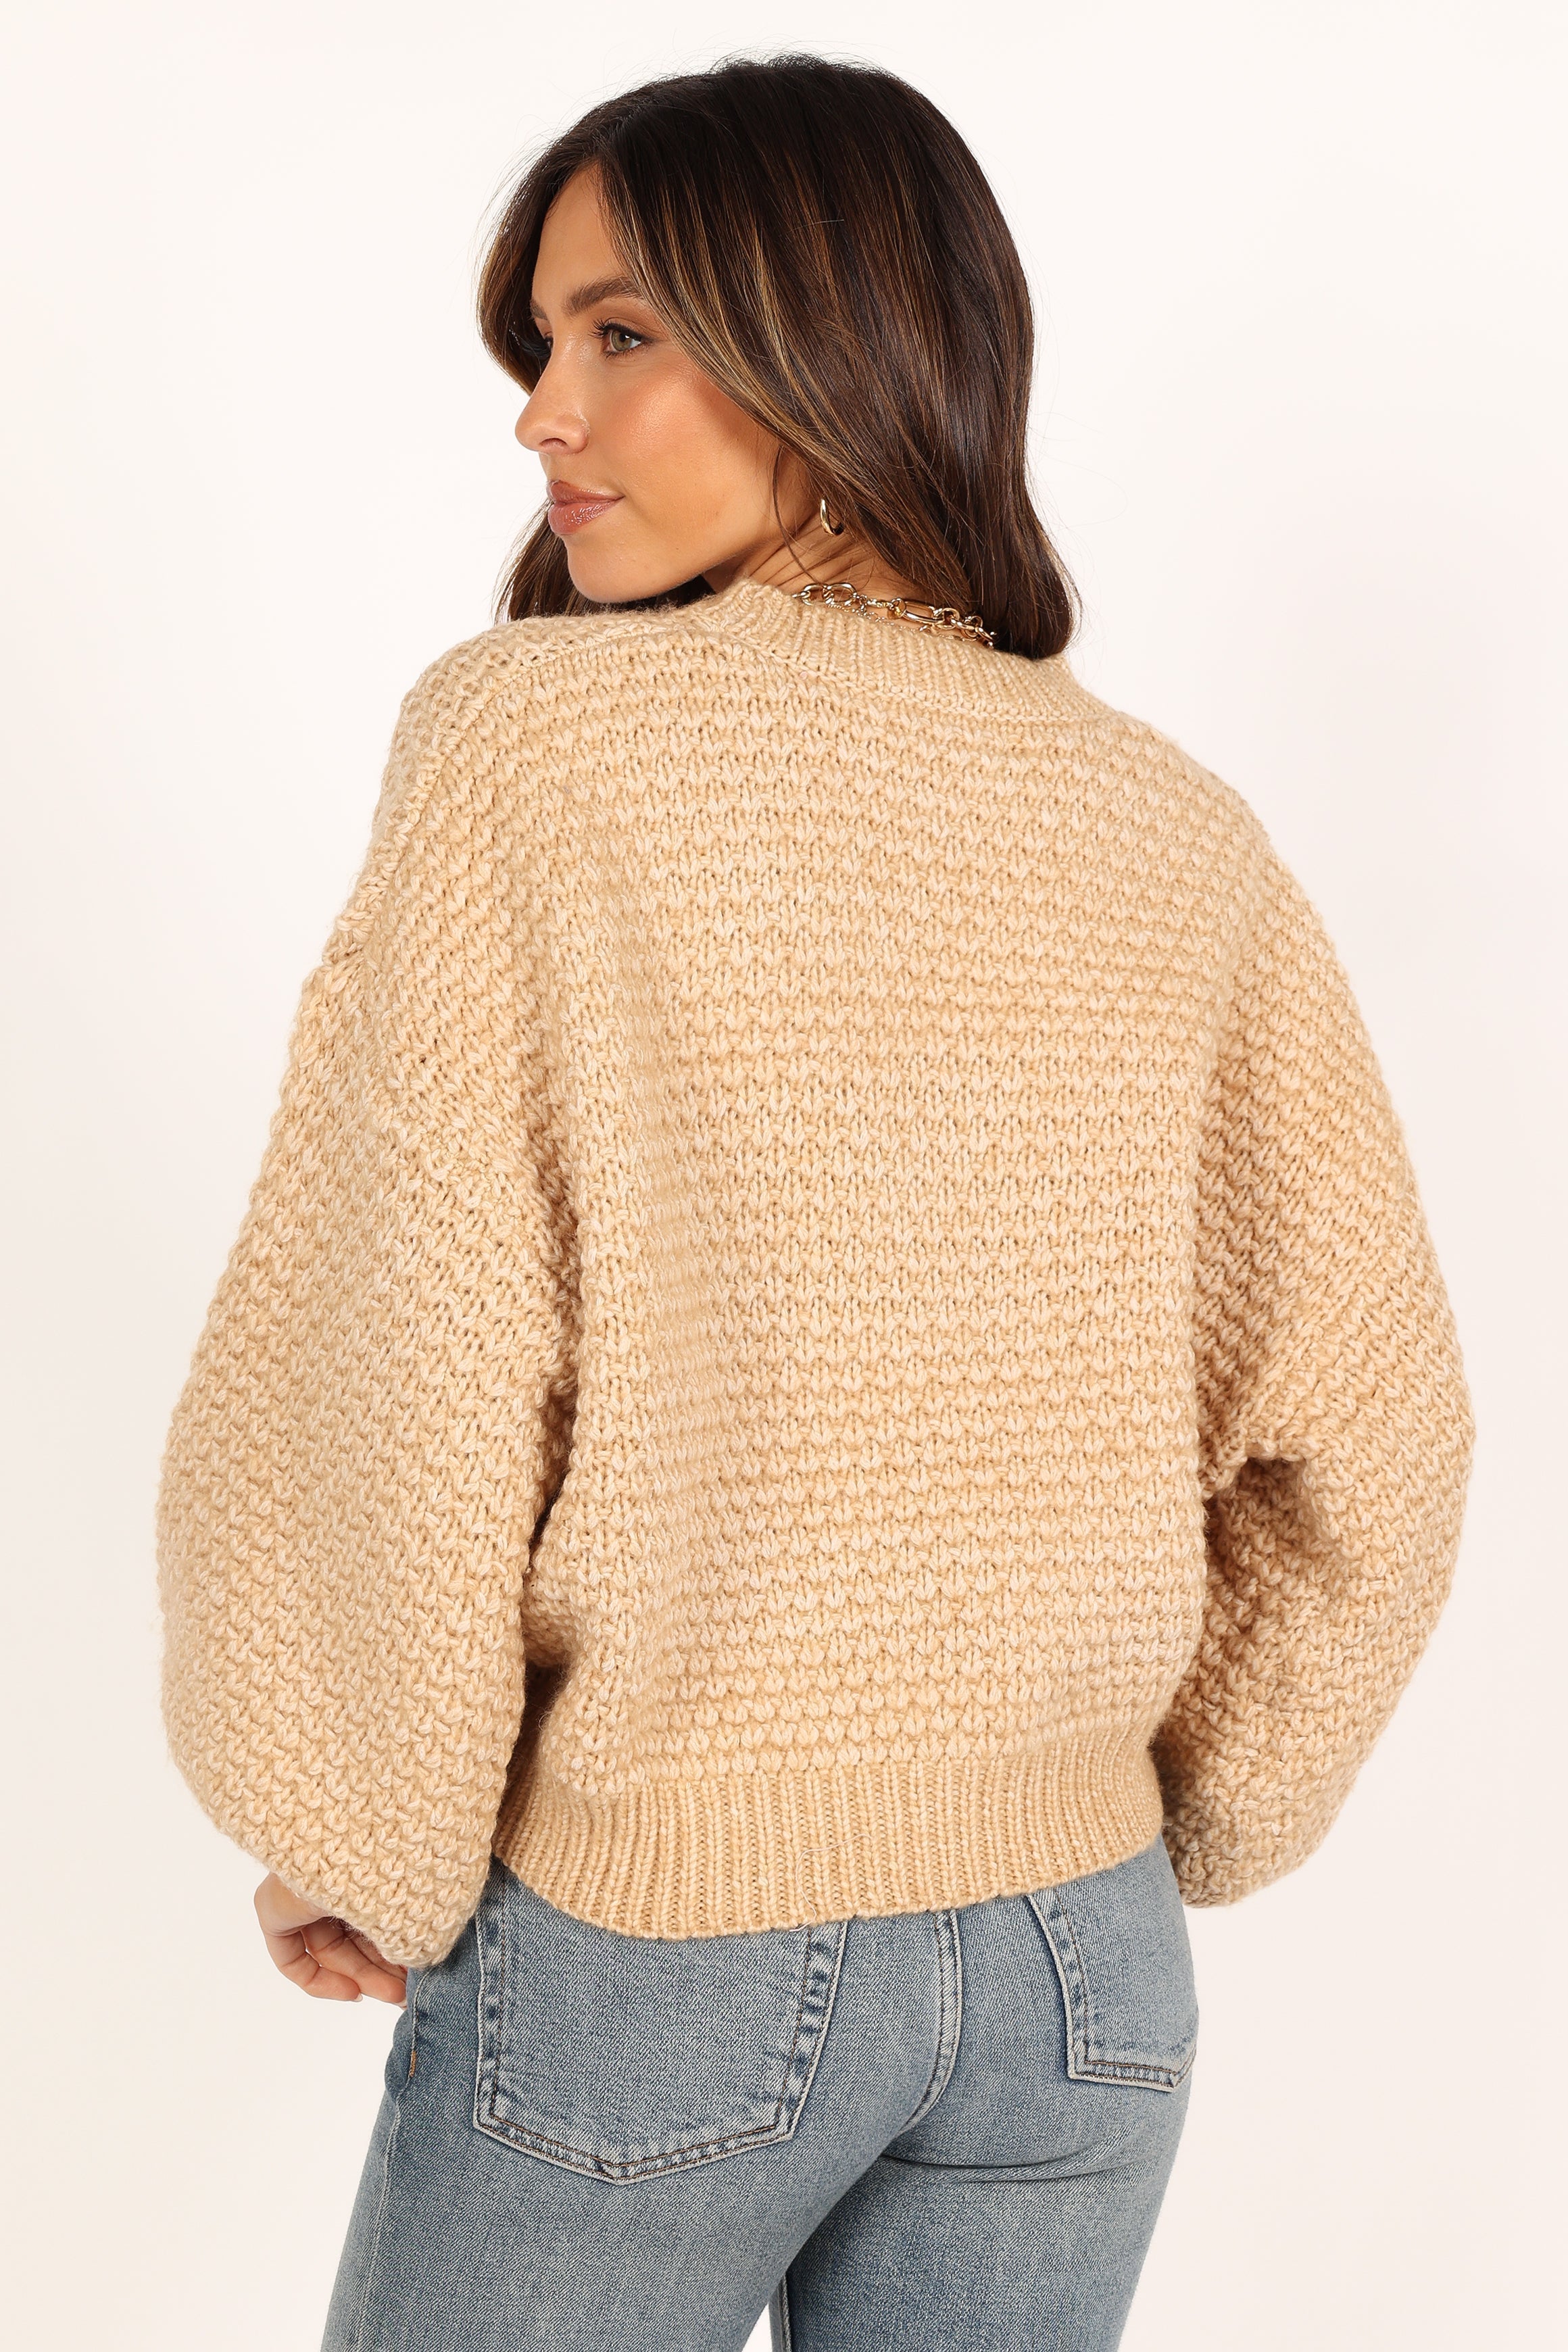 Ziggy Knit Sweater - Tan